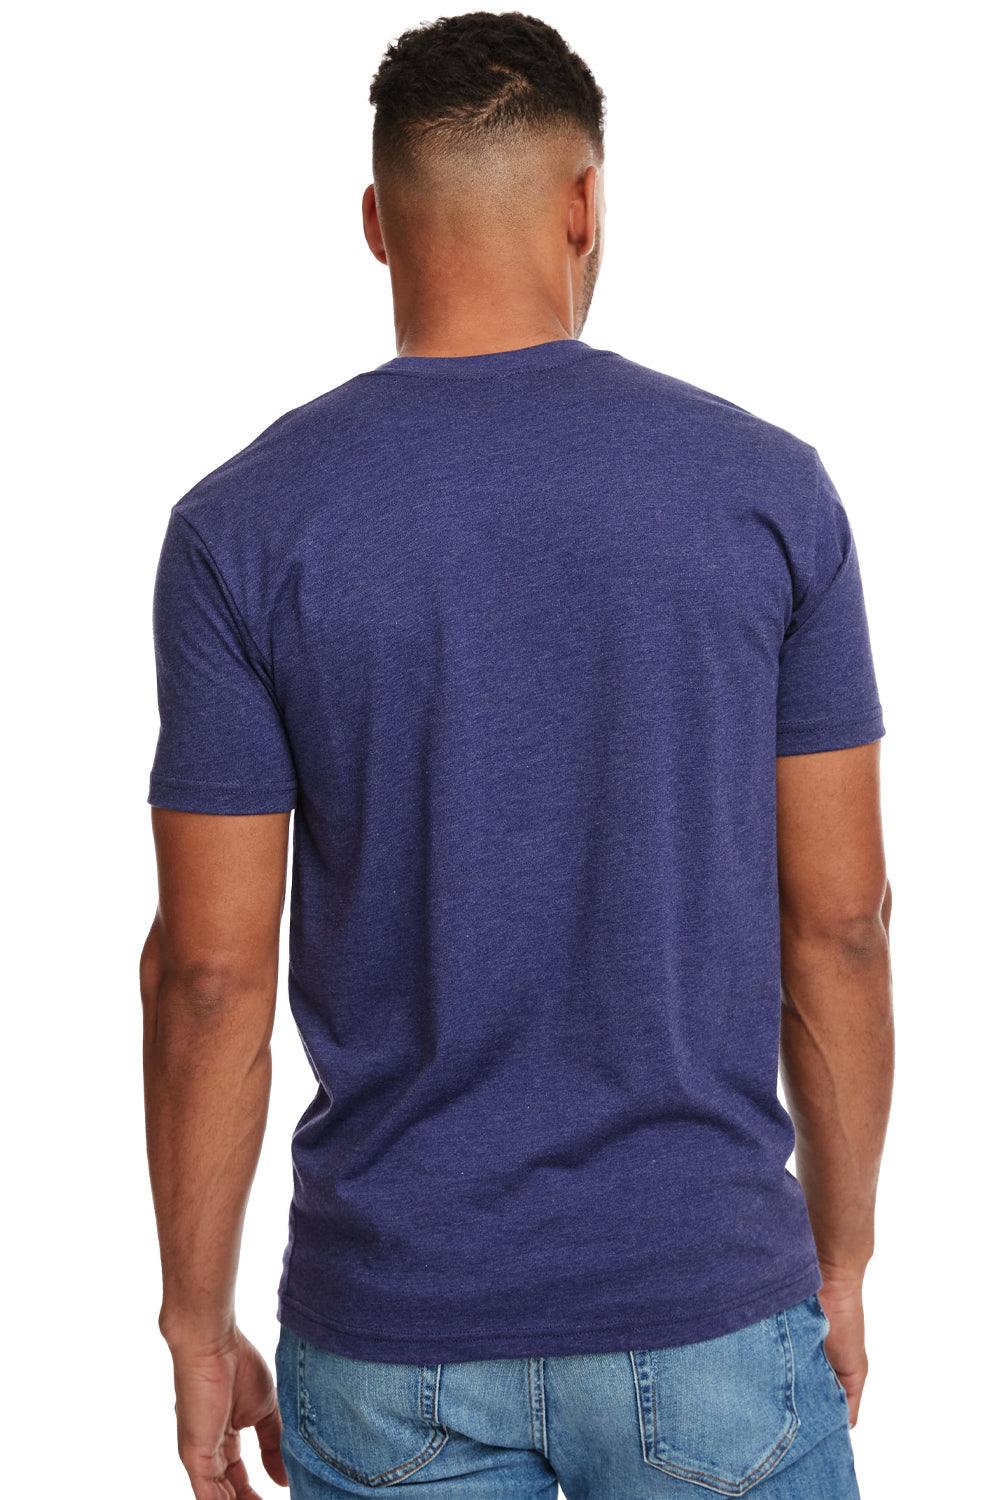 Next Level N6210 Mens CVC Jersey Short Sleeve Crewneck T-Shirt Storm Blue Back